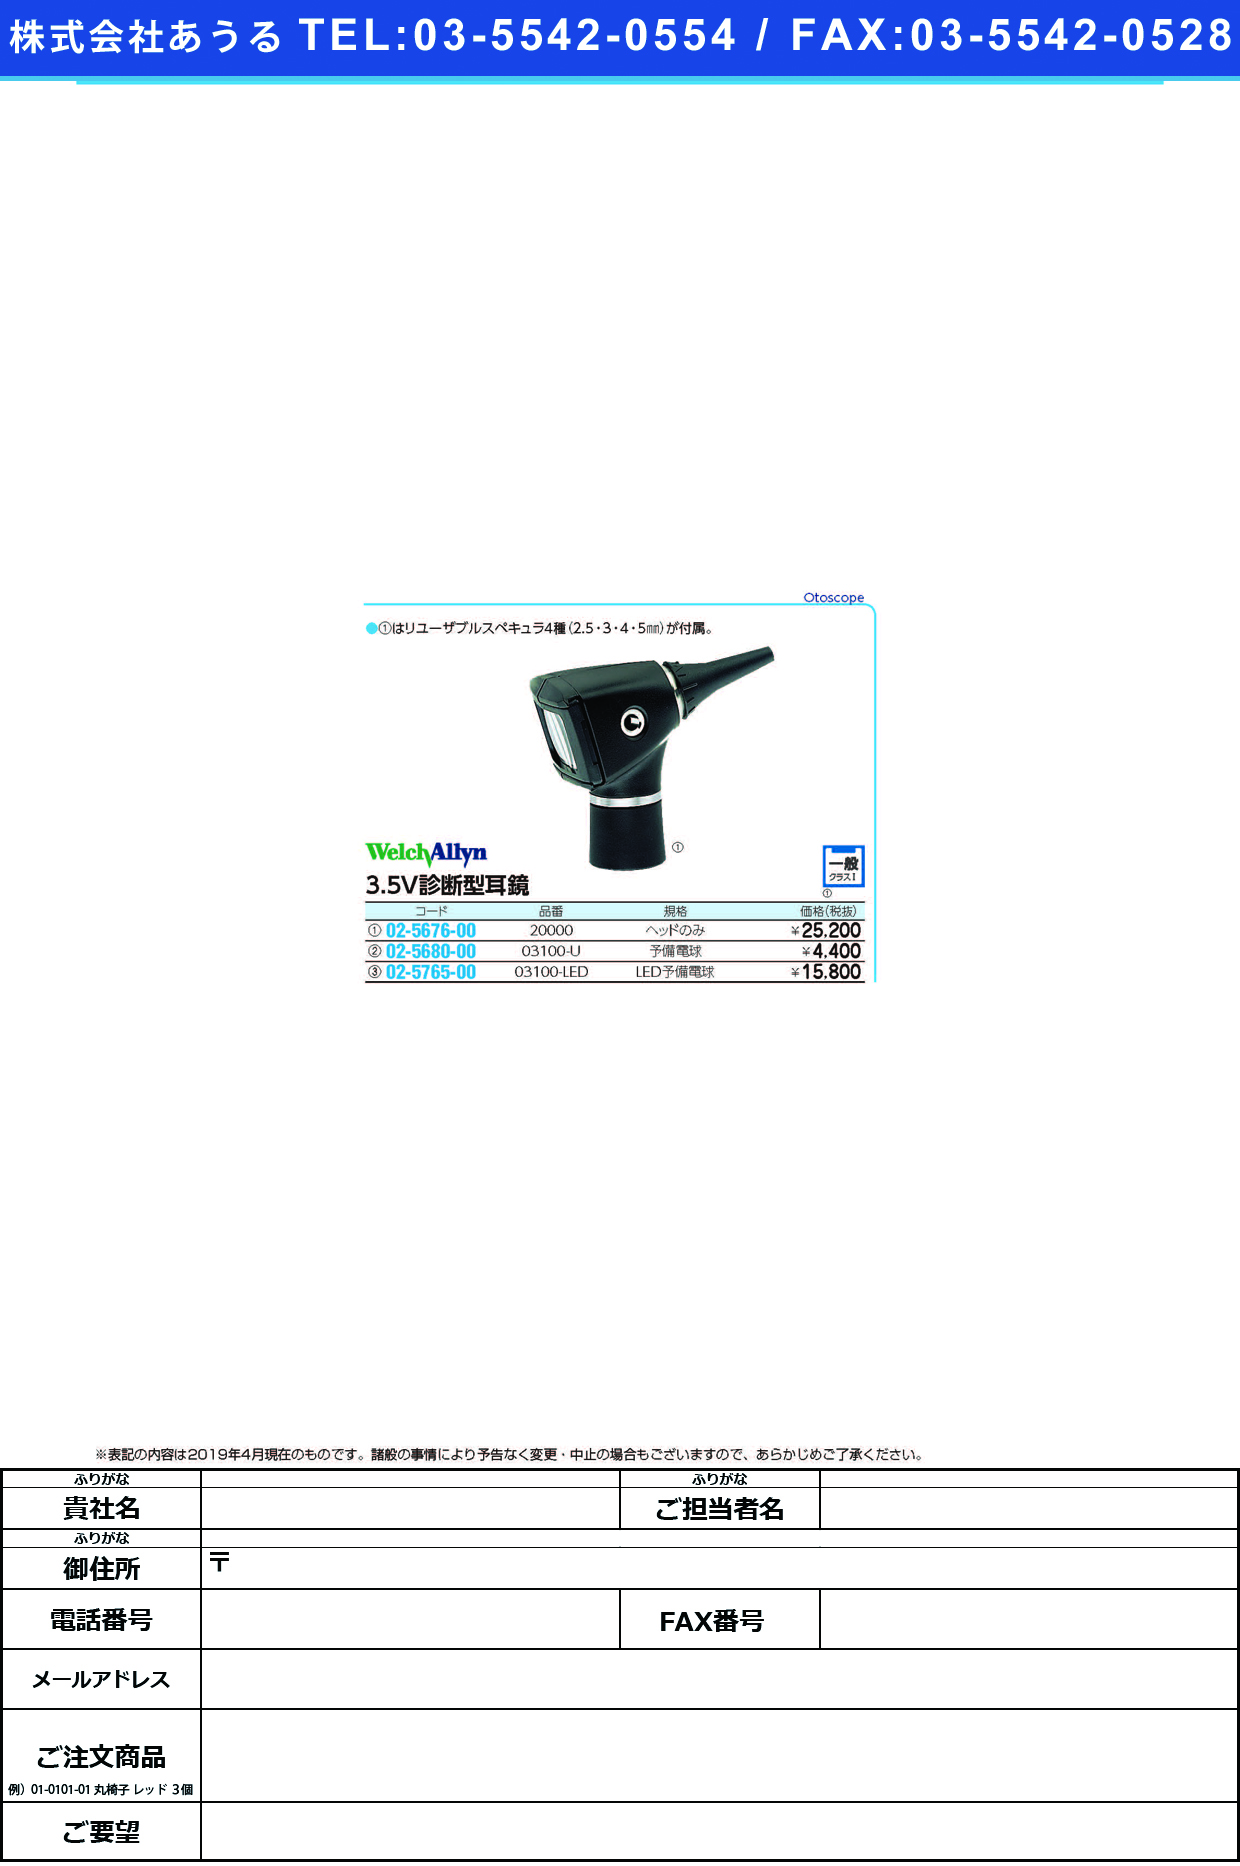 (02-5676-00)３．５Ｖ診断型耳鏡ヘッド 20000(ｽﾍﾟｷｭﾗ4ｼｭﾂｷ) ｼﾝﾀﾞﾝｶﾞﾀｼﾞｷｮｳﾍｯﾄﾞ【1個単位】【2019年カタログ商品】